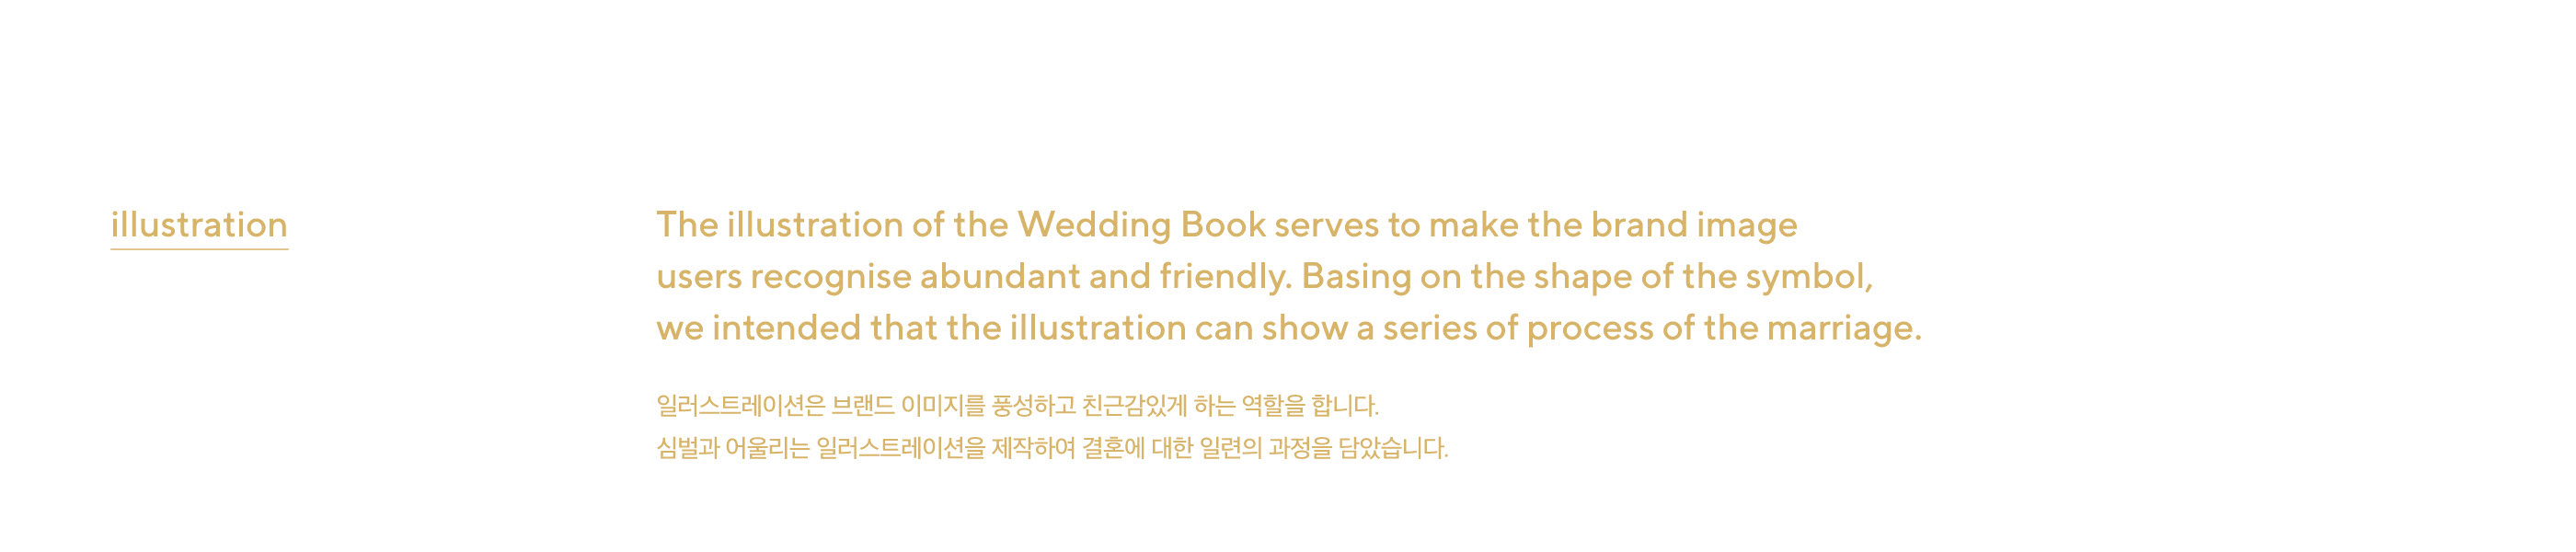 Wedding Book婚礼服务品牌VI设计